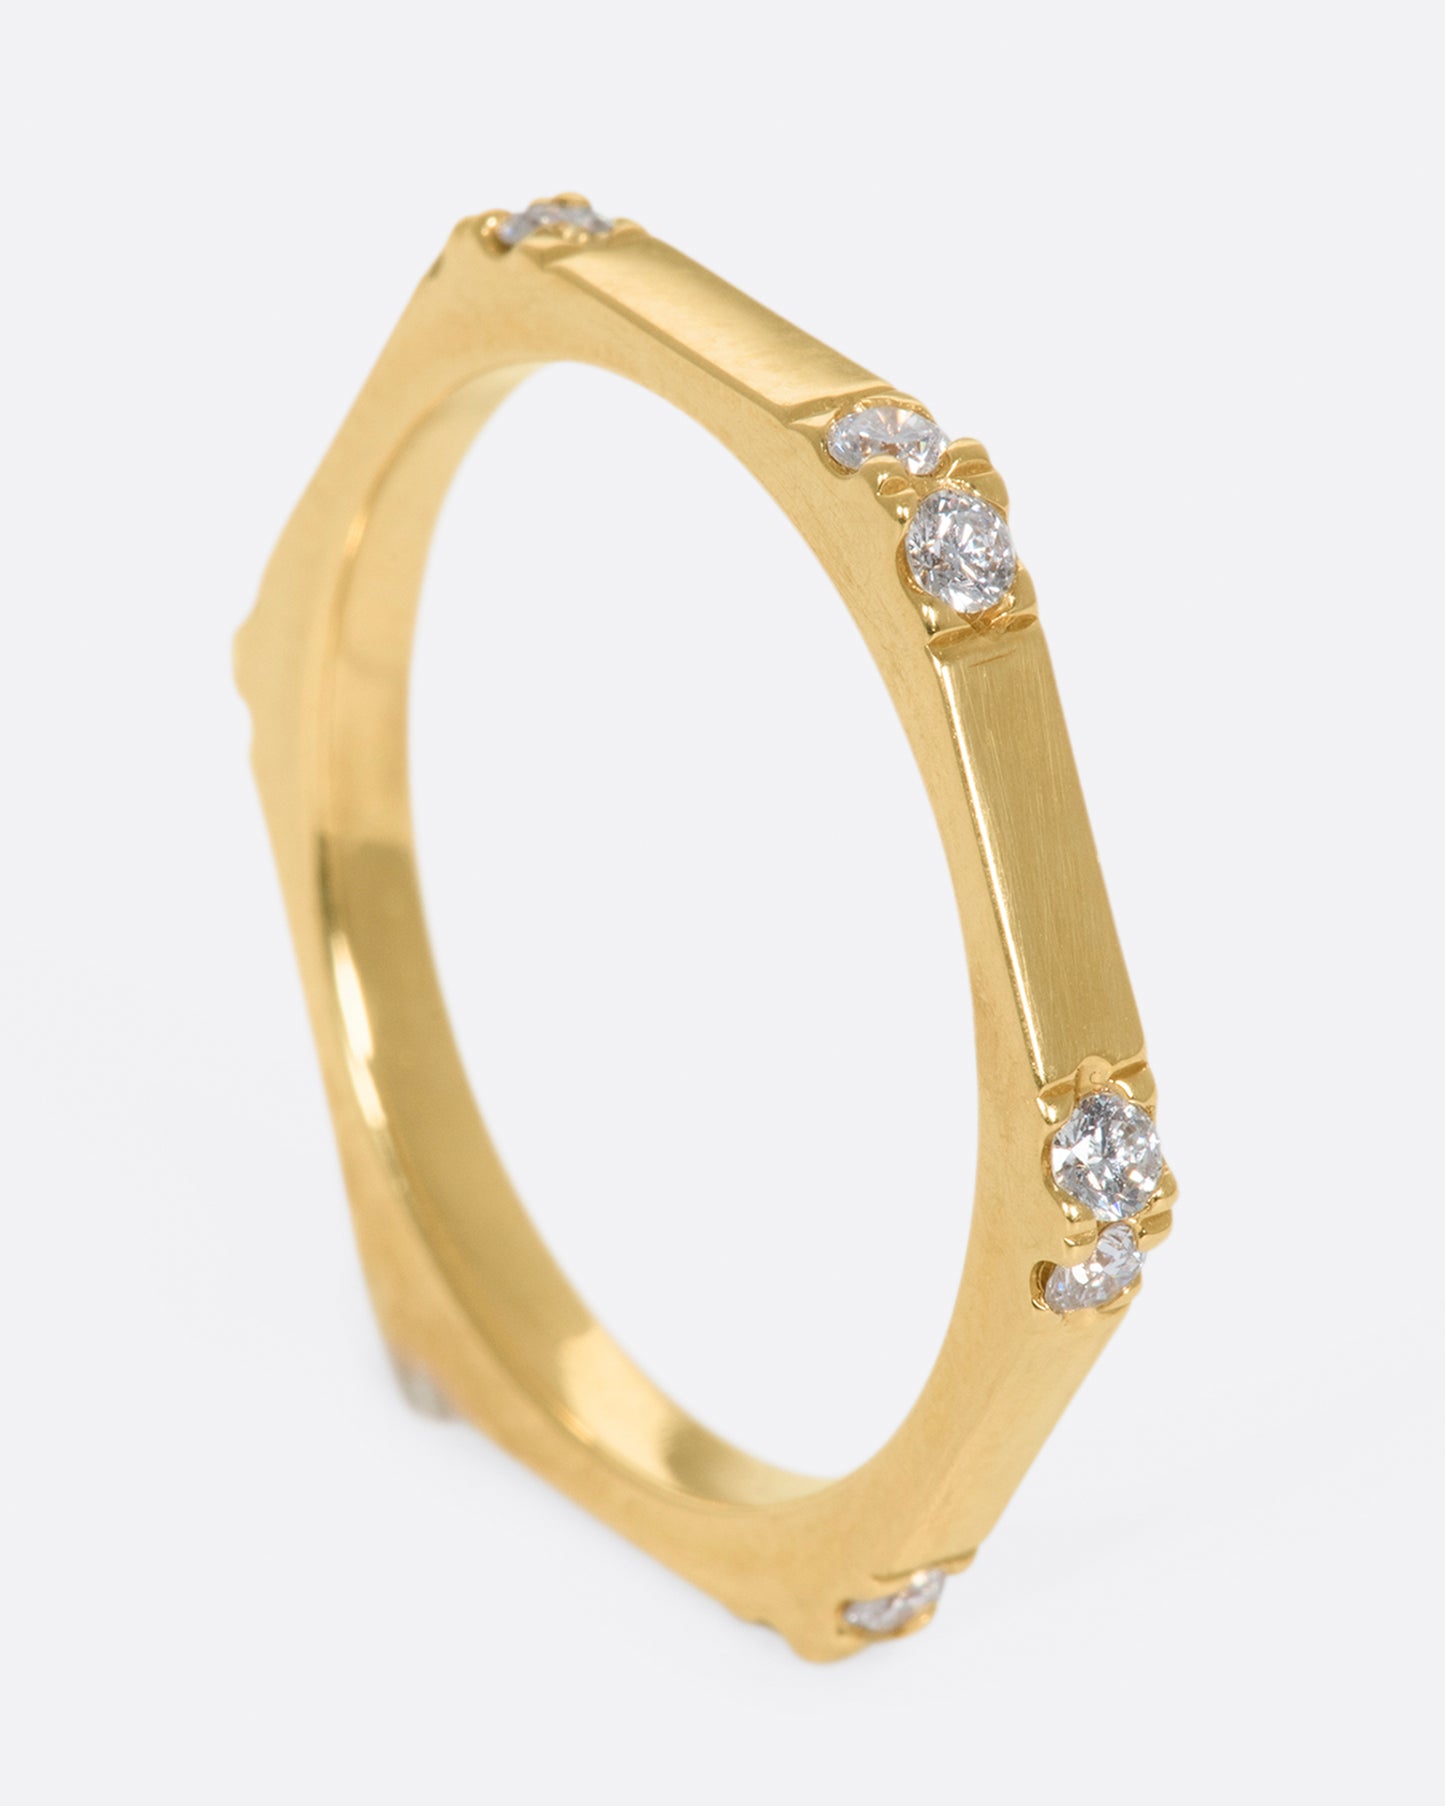 A hefty, hexagonal ring with diamond on each corner.